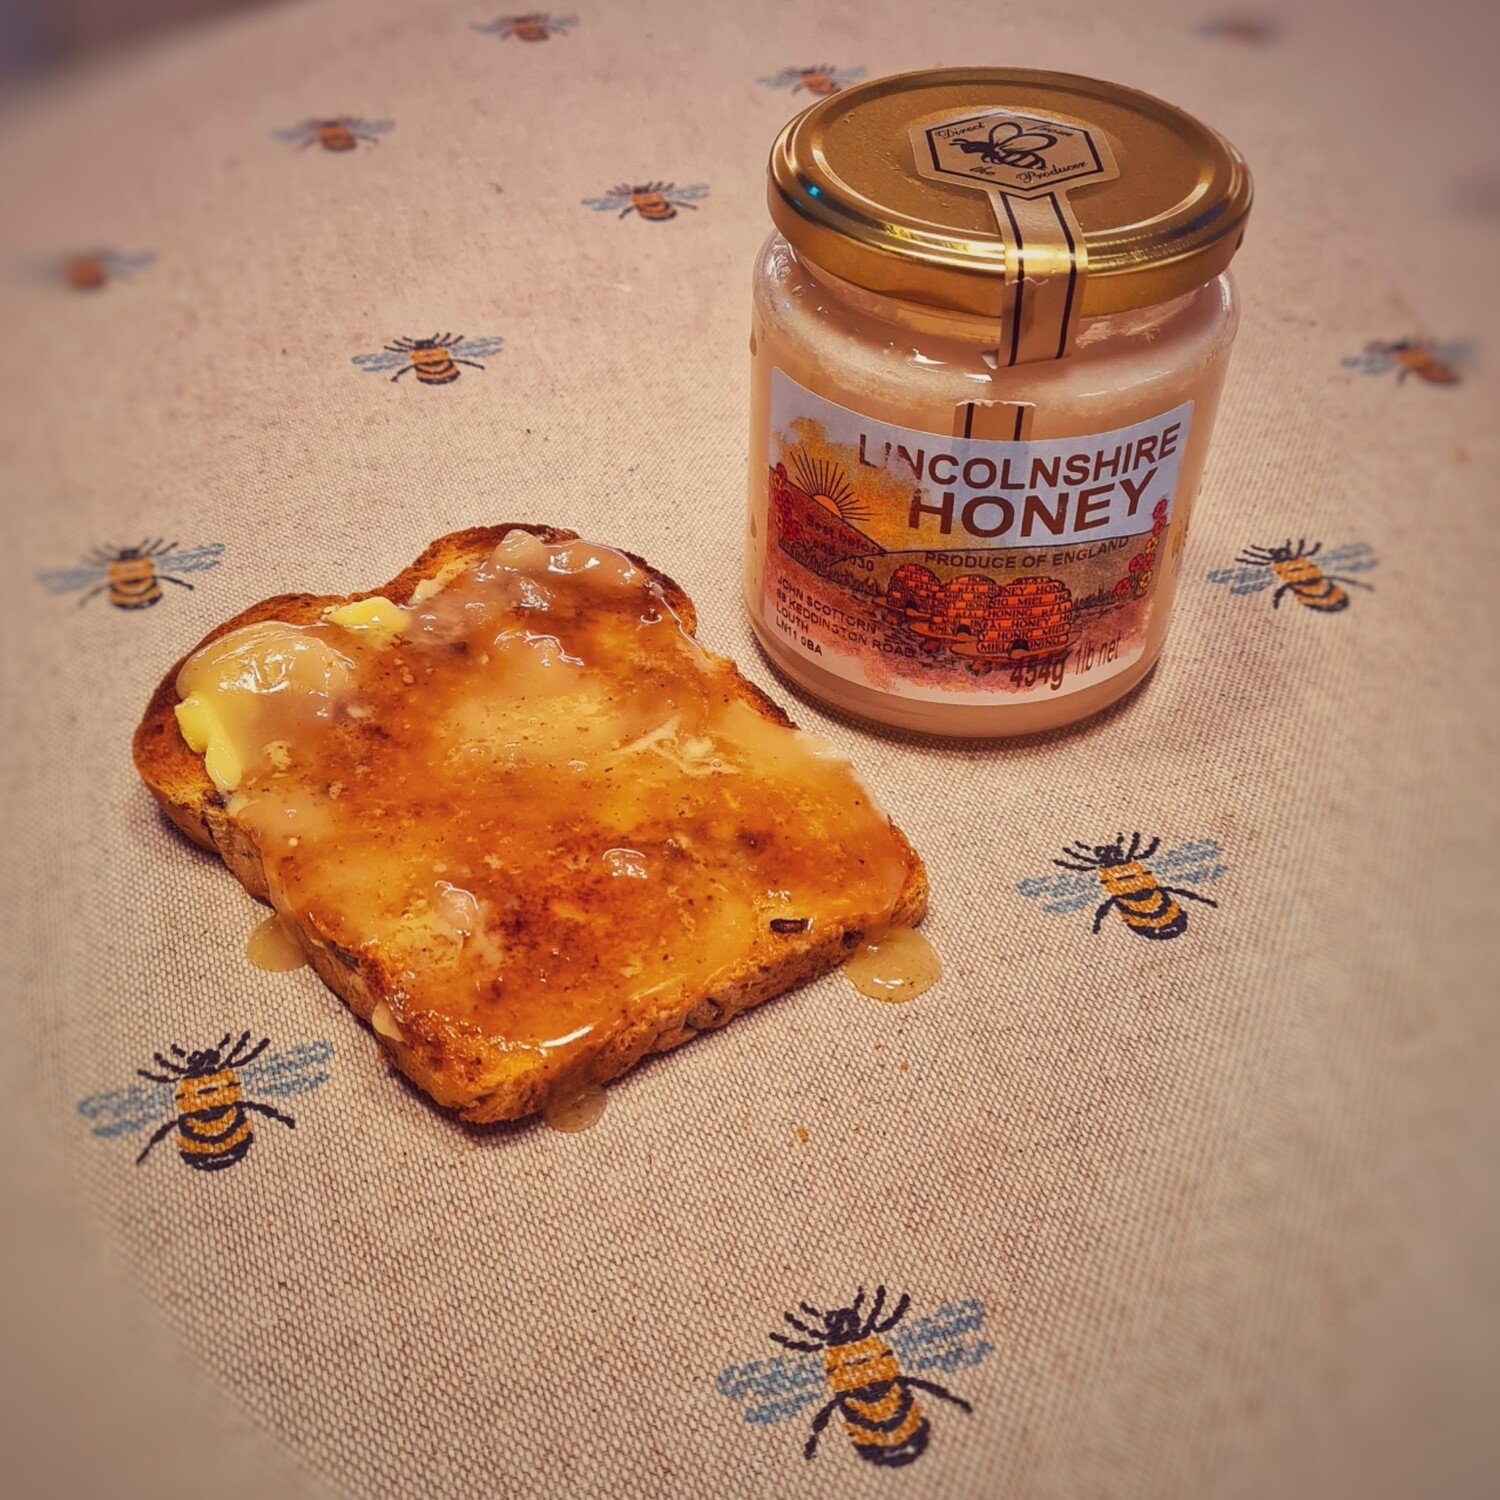 Lincolnshire Honey